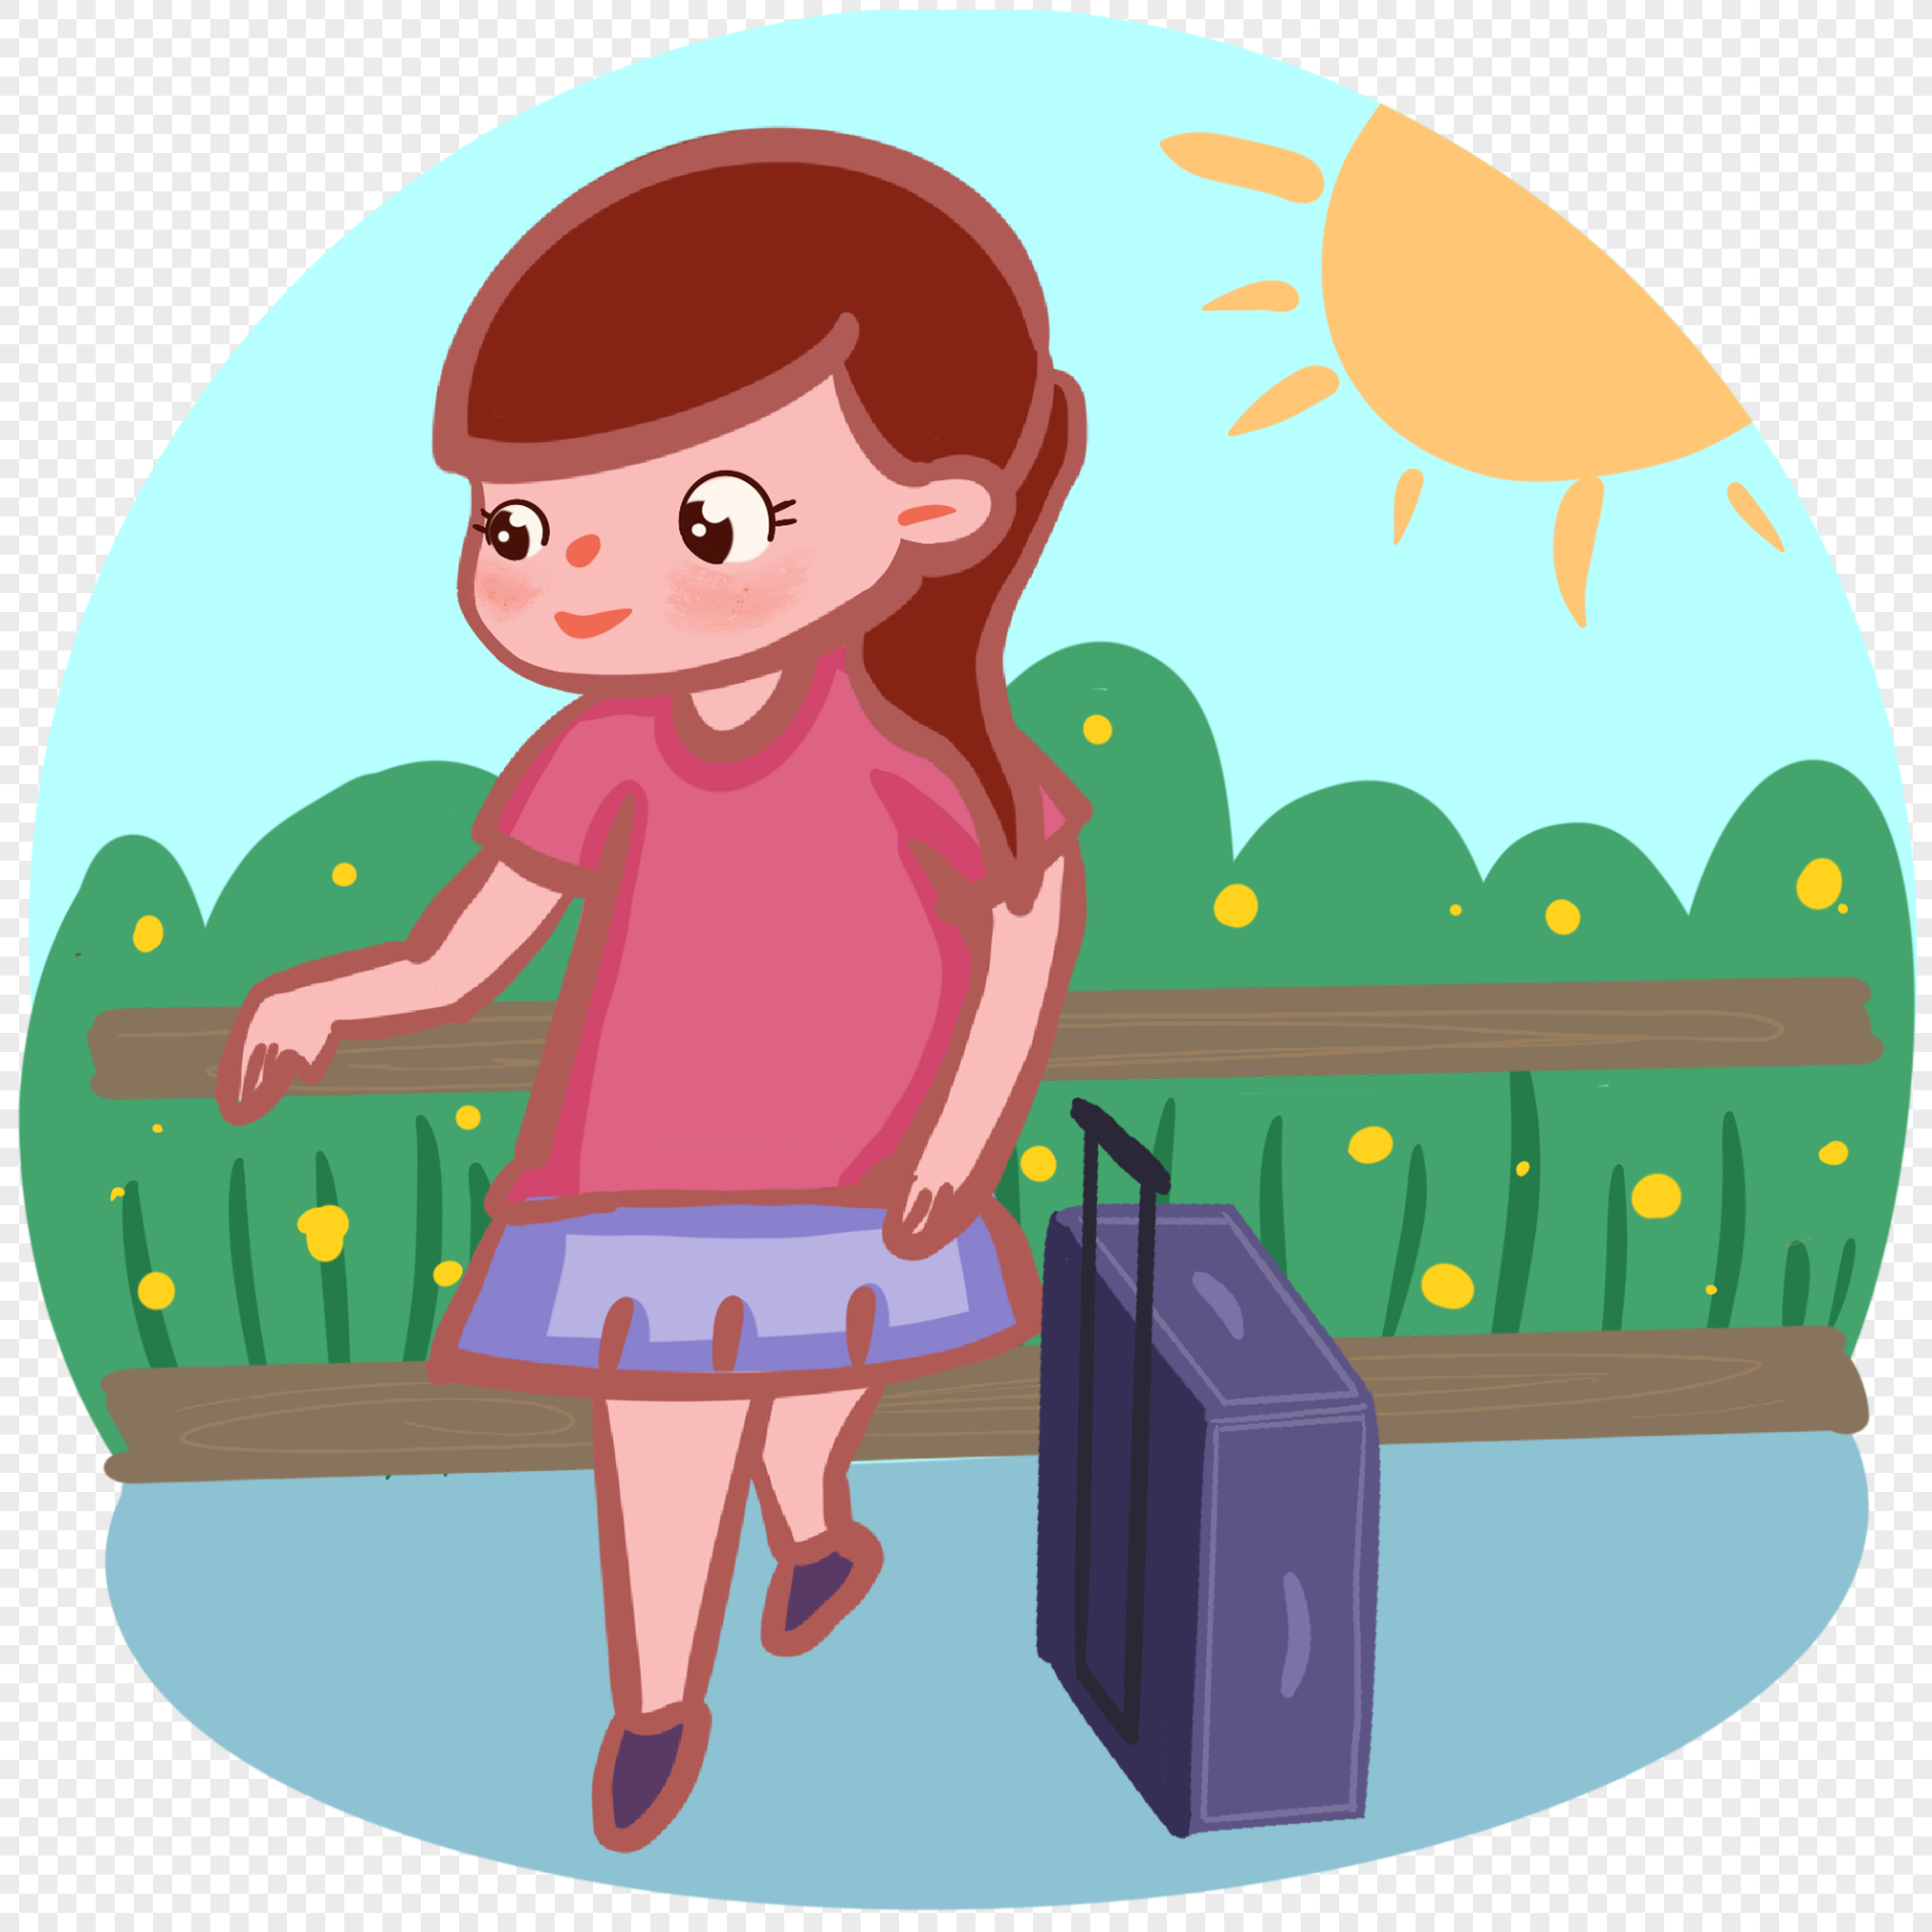 Tourist girl, girl illustration, girl walking, cartoon girl png transparent background